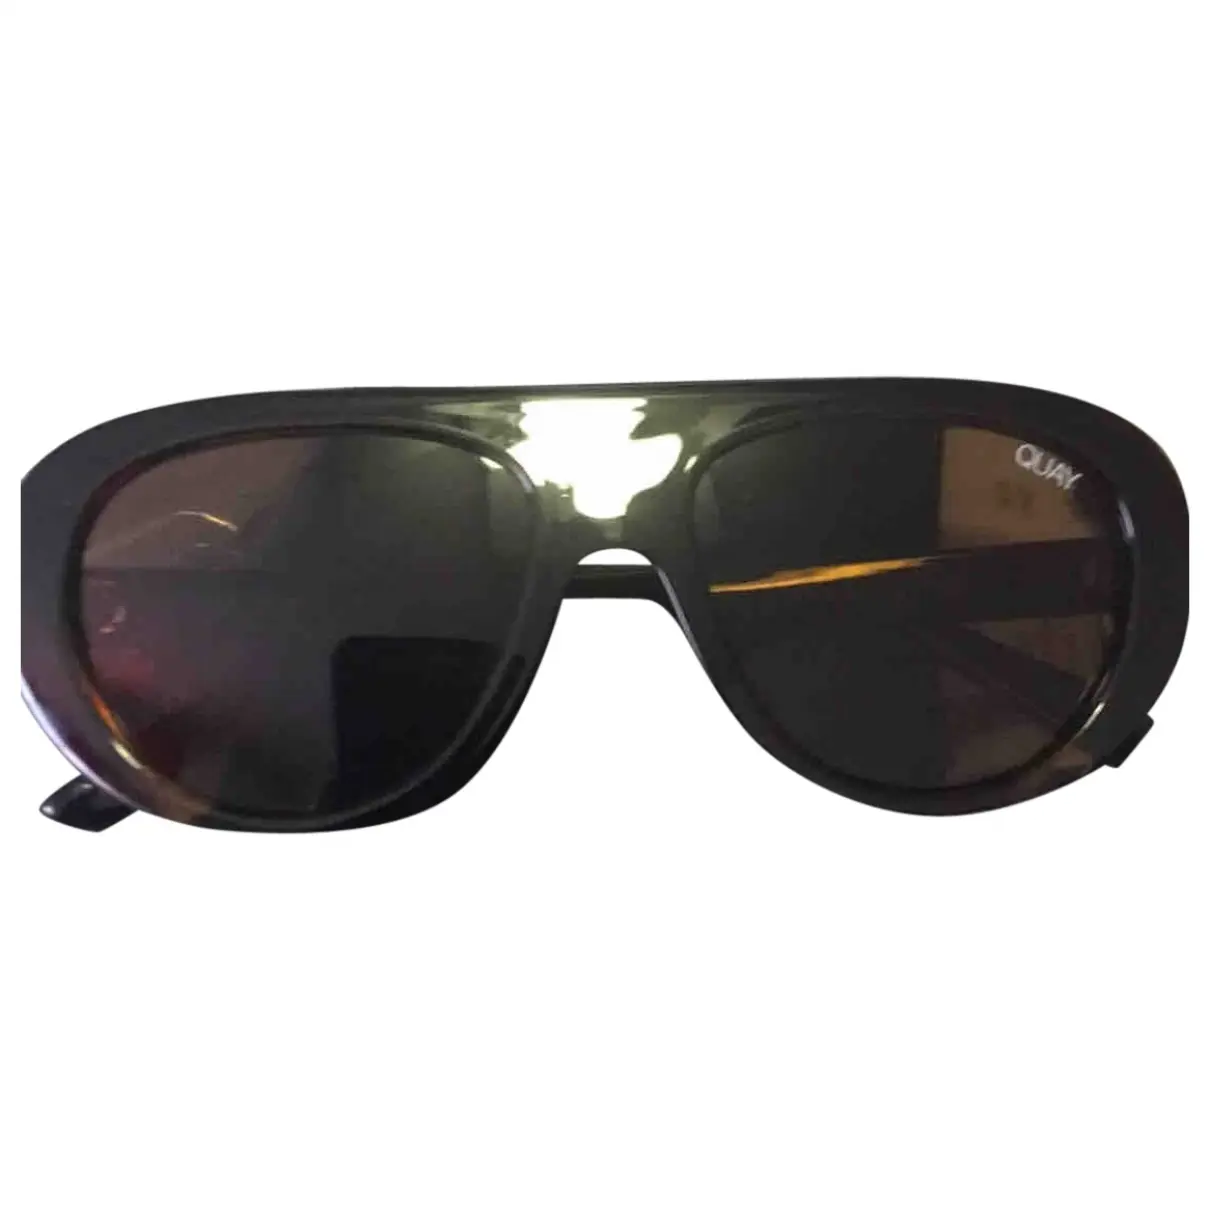 Oversized sunglasses Quay